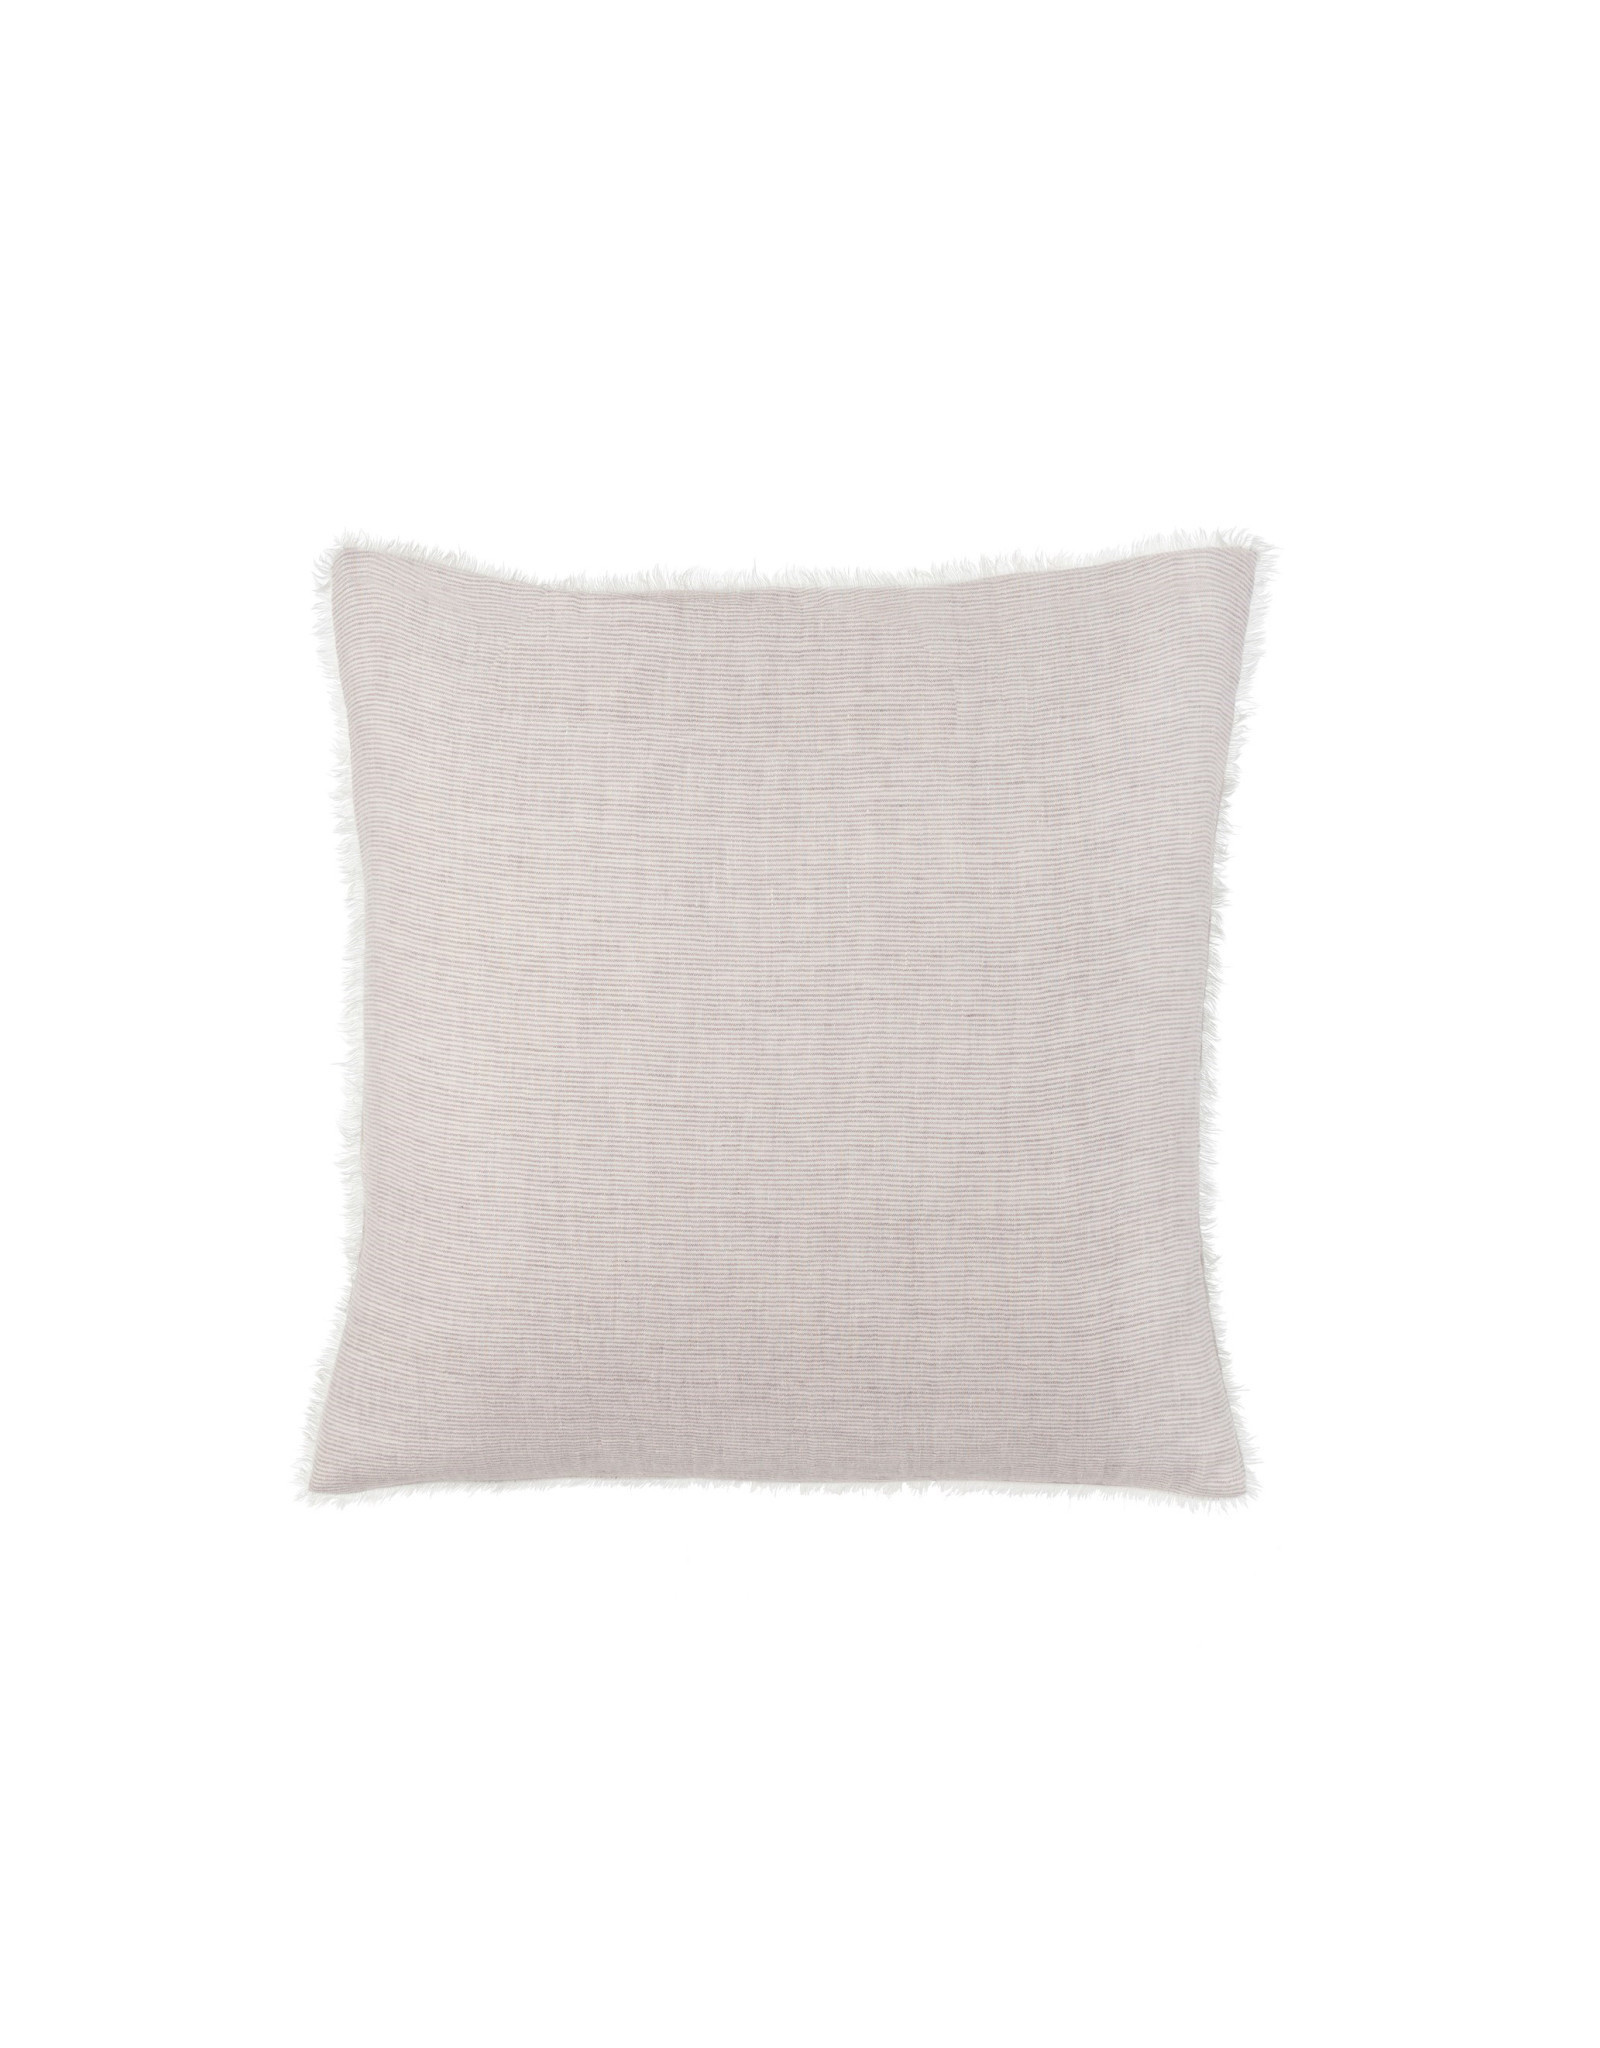 Indaba Lina Linen Pillow - Grey Stripe